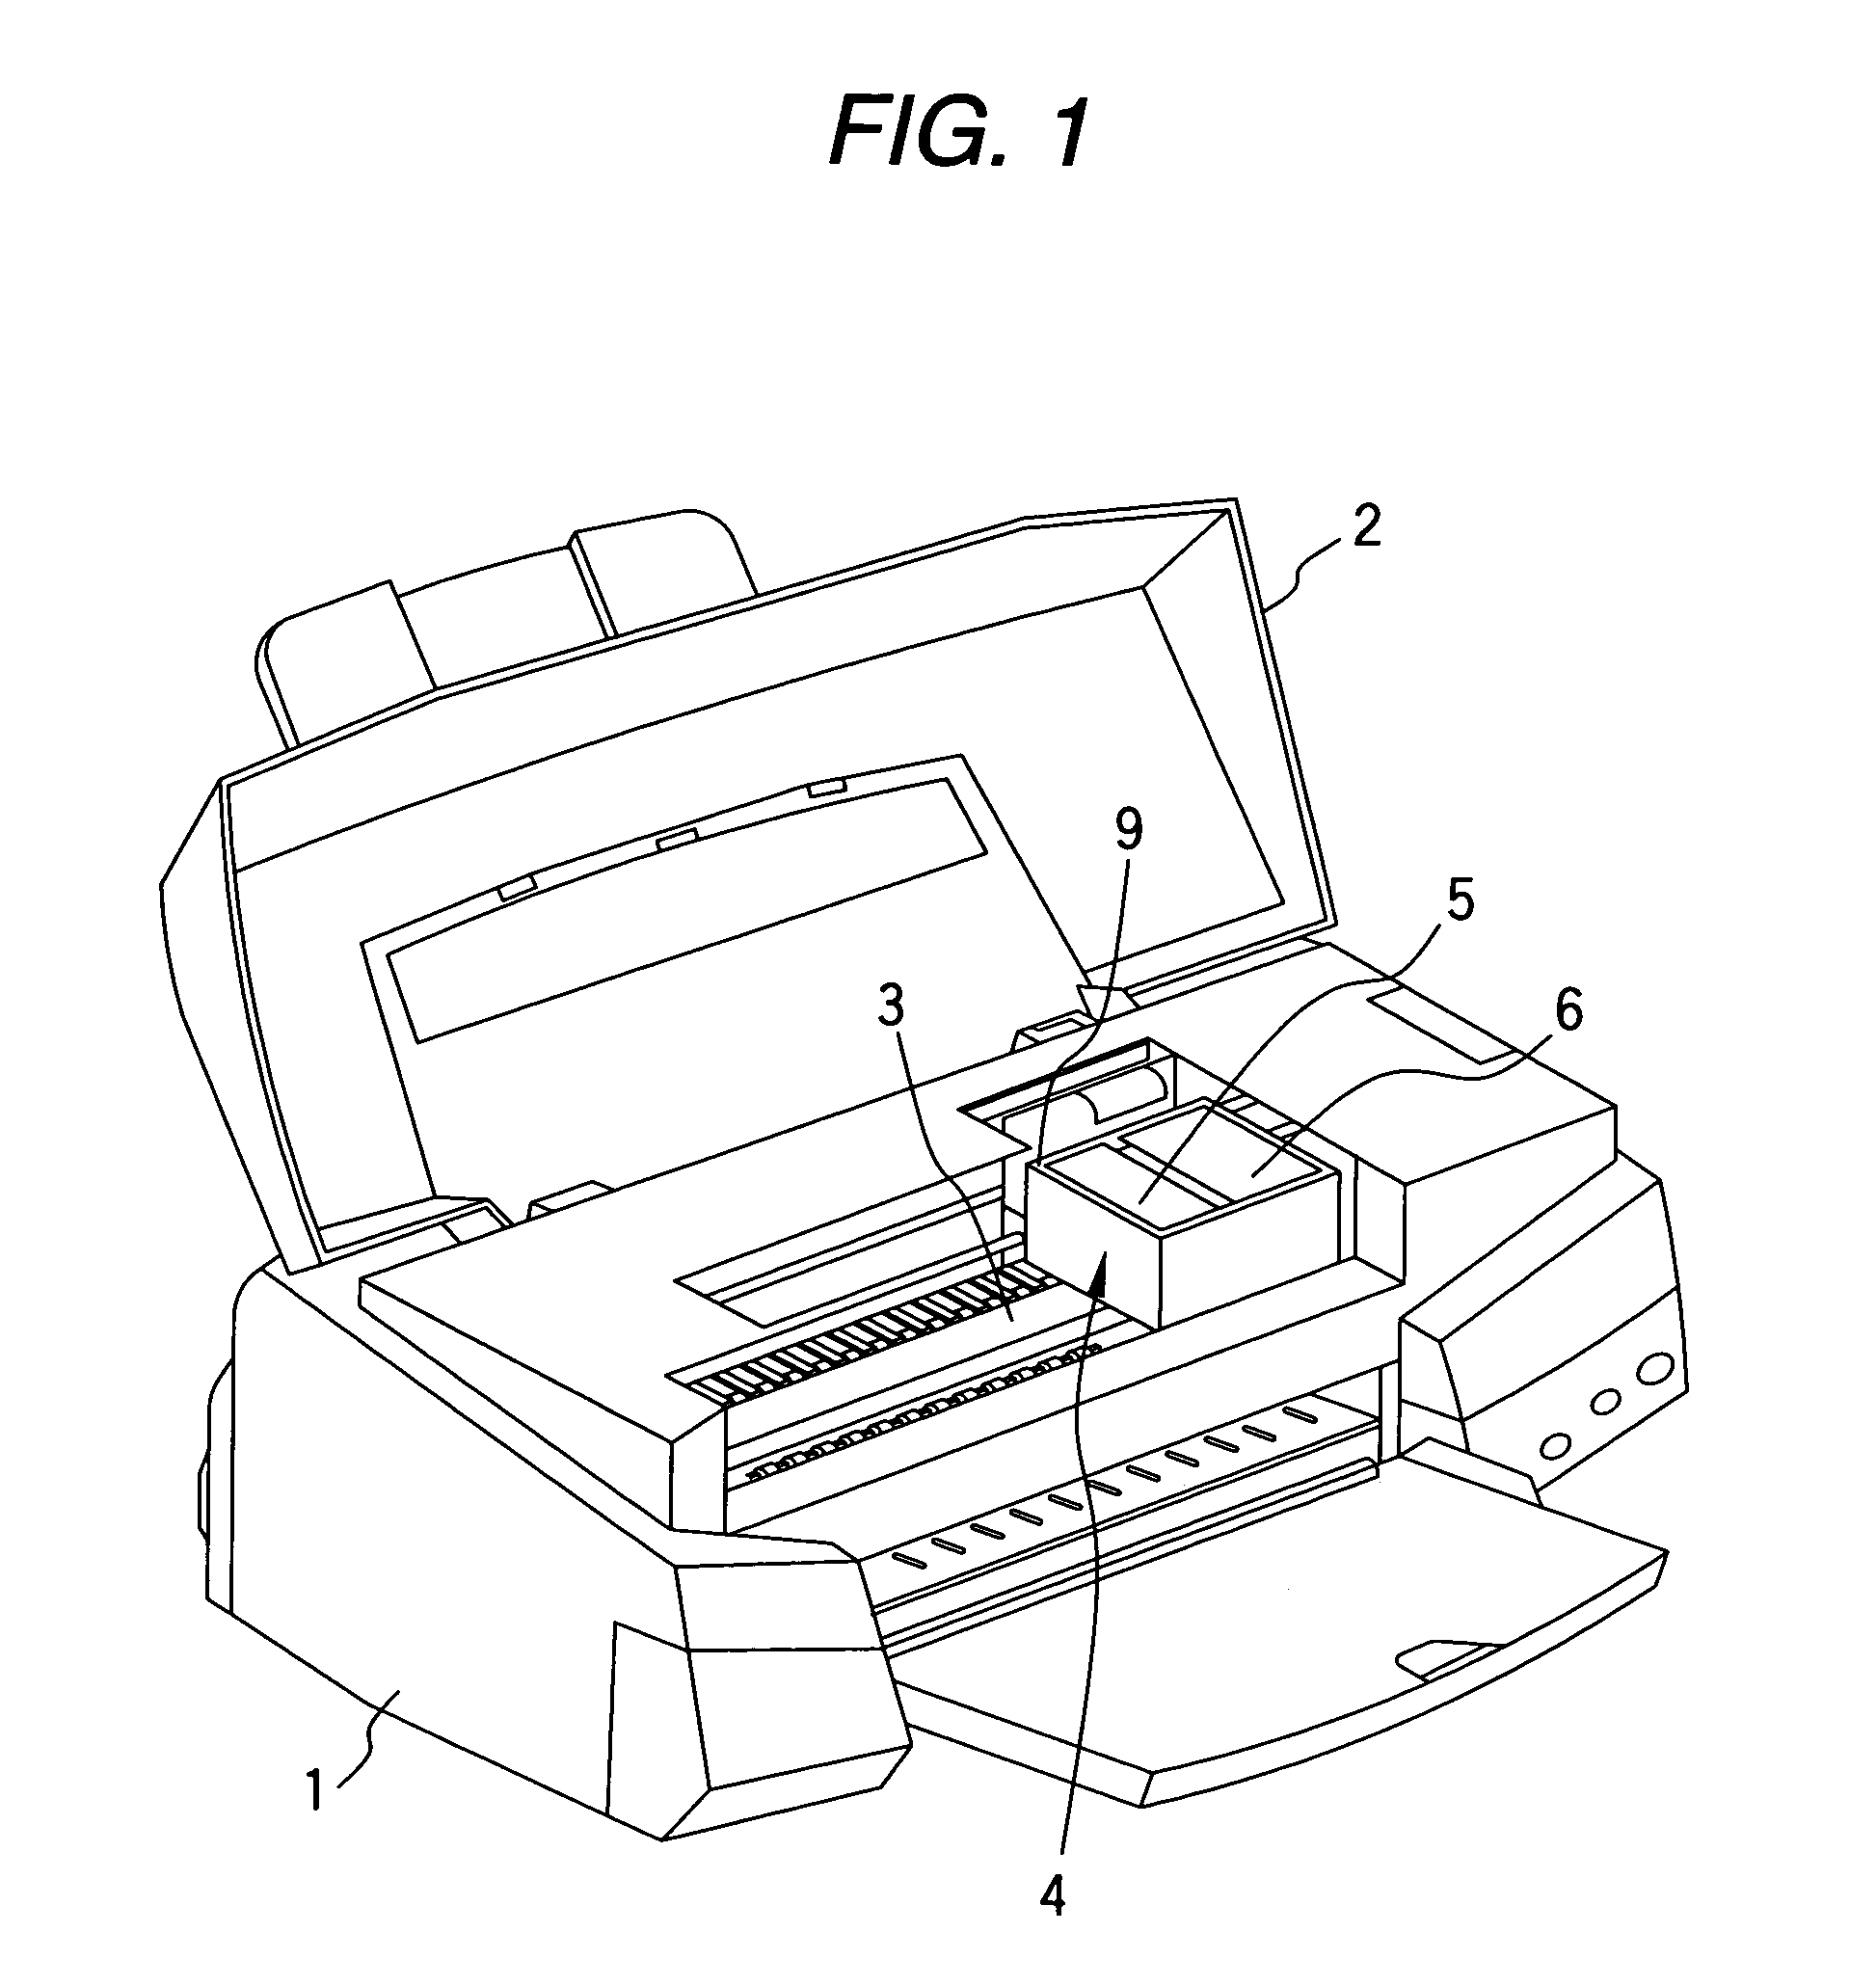 Inkjet recording apparatus and ink cartridge